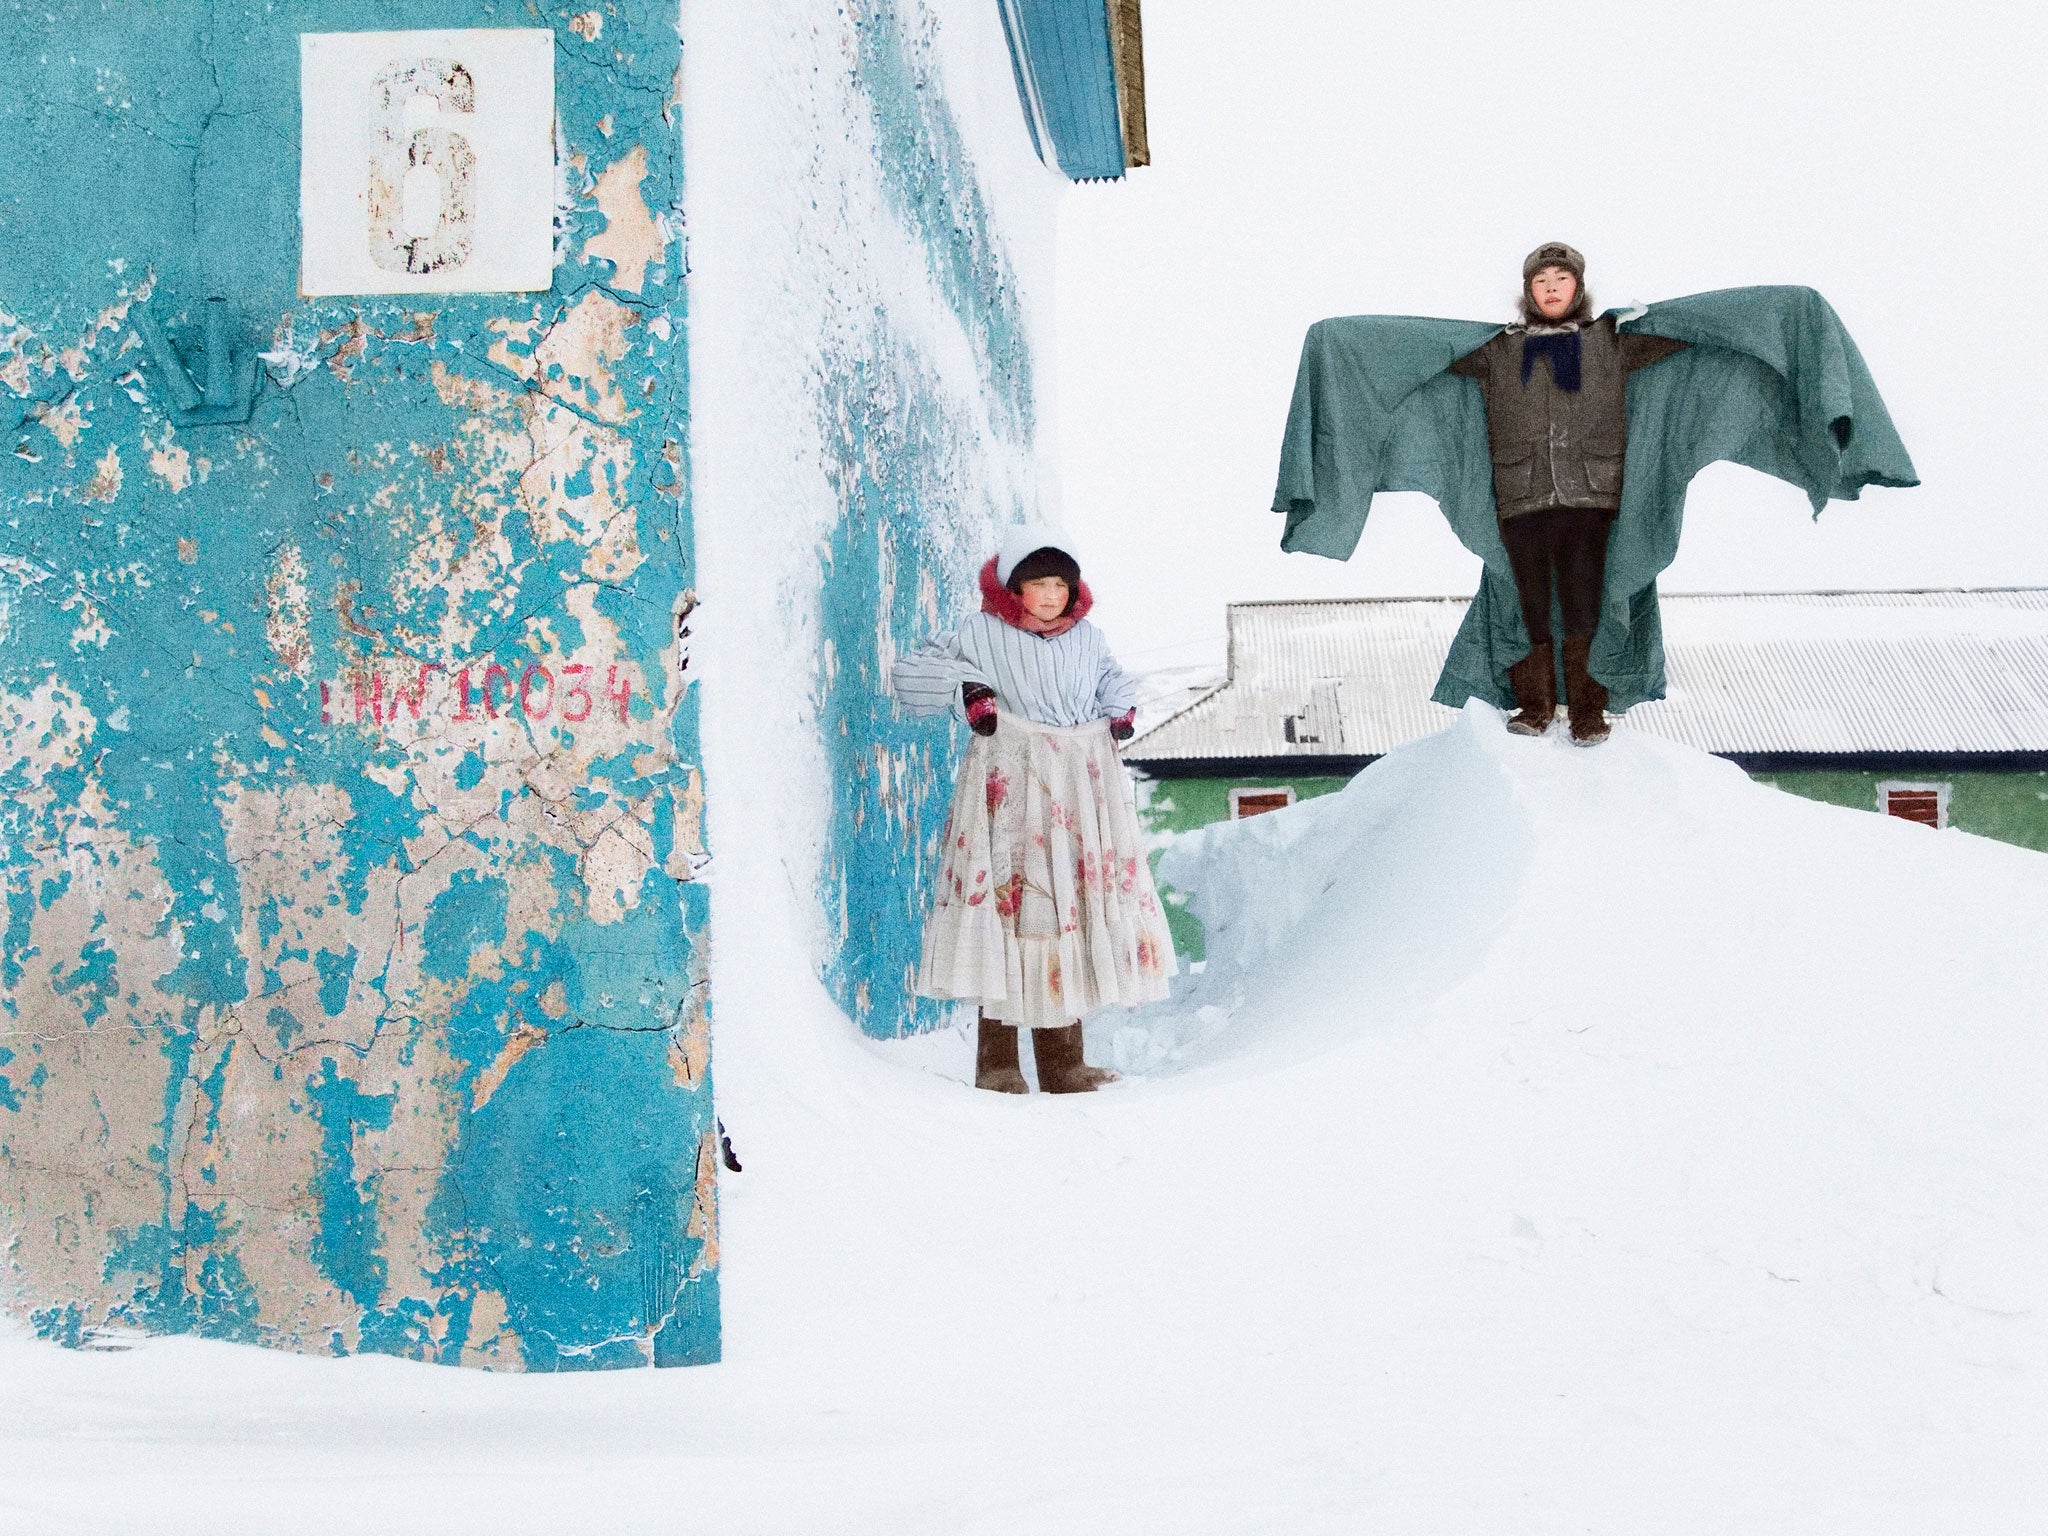 Arctic Stories: Photographer Evgenia Arbugaeva returns to her 